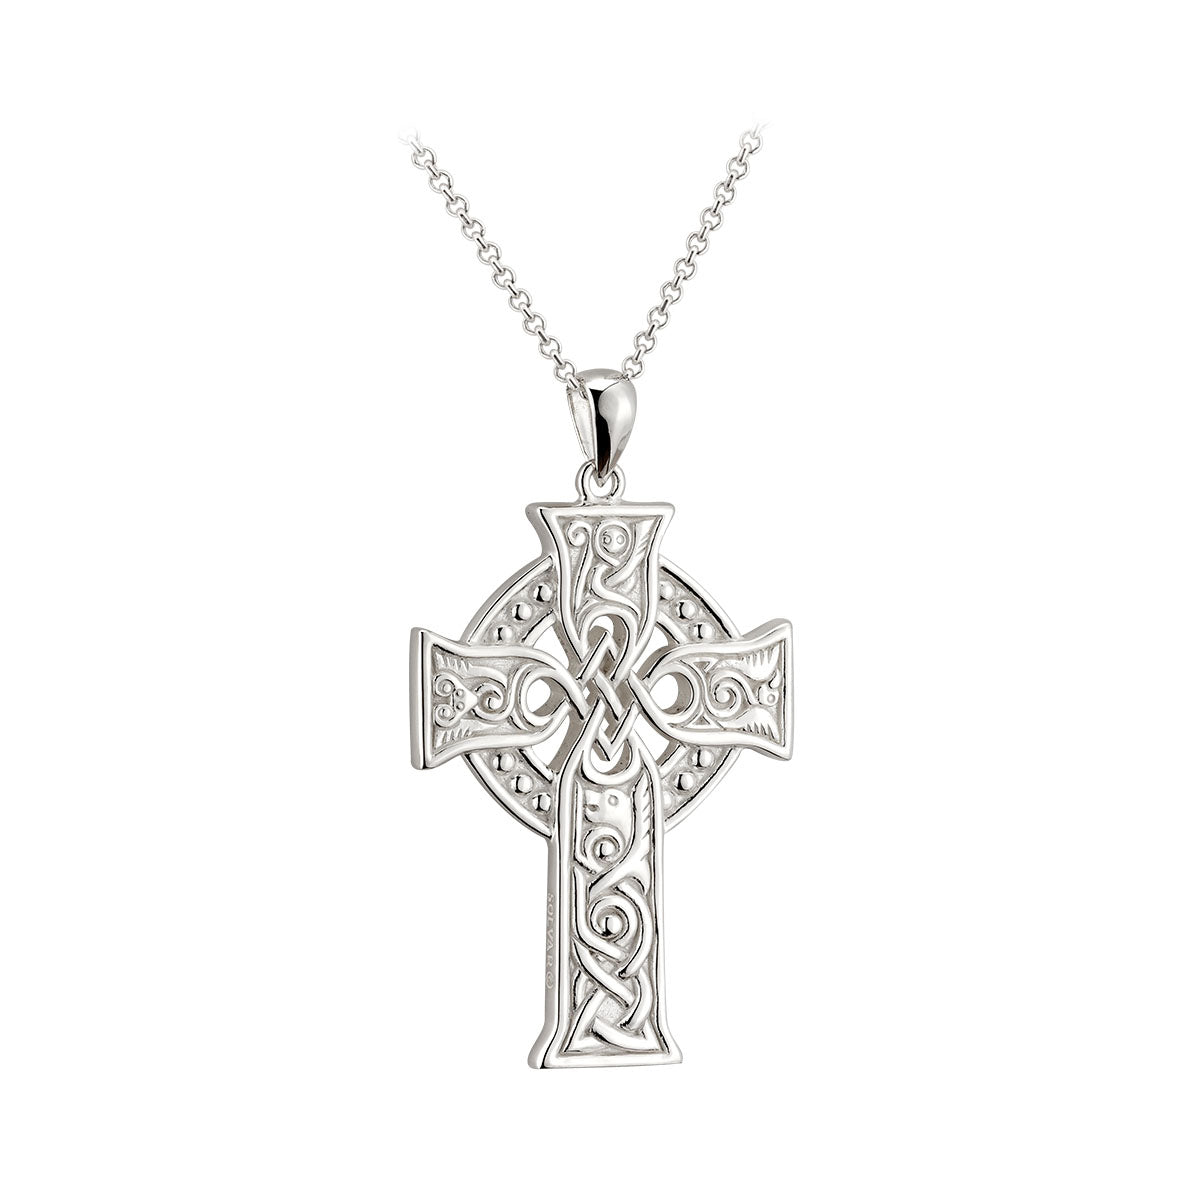 sterling silver large four apostles celtic cross pendant s46605 from Solvar